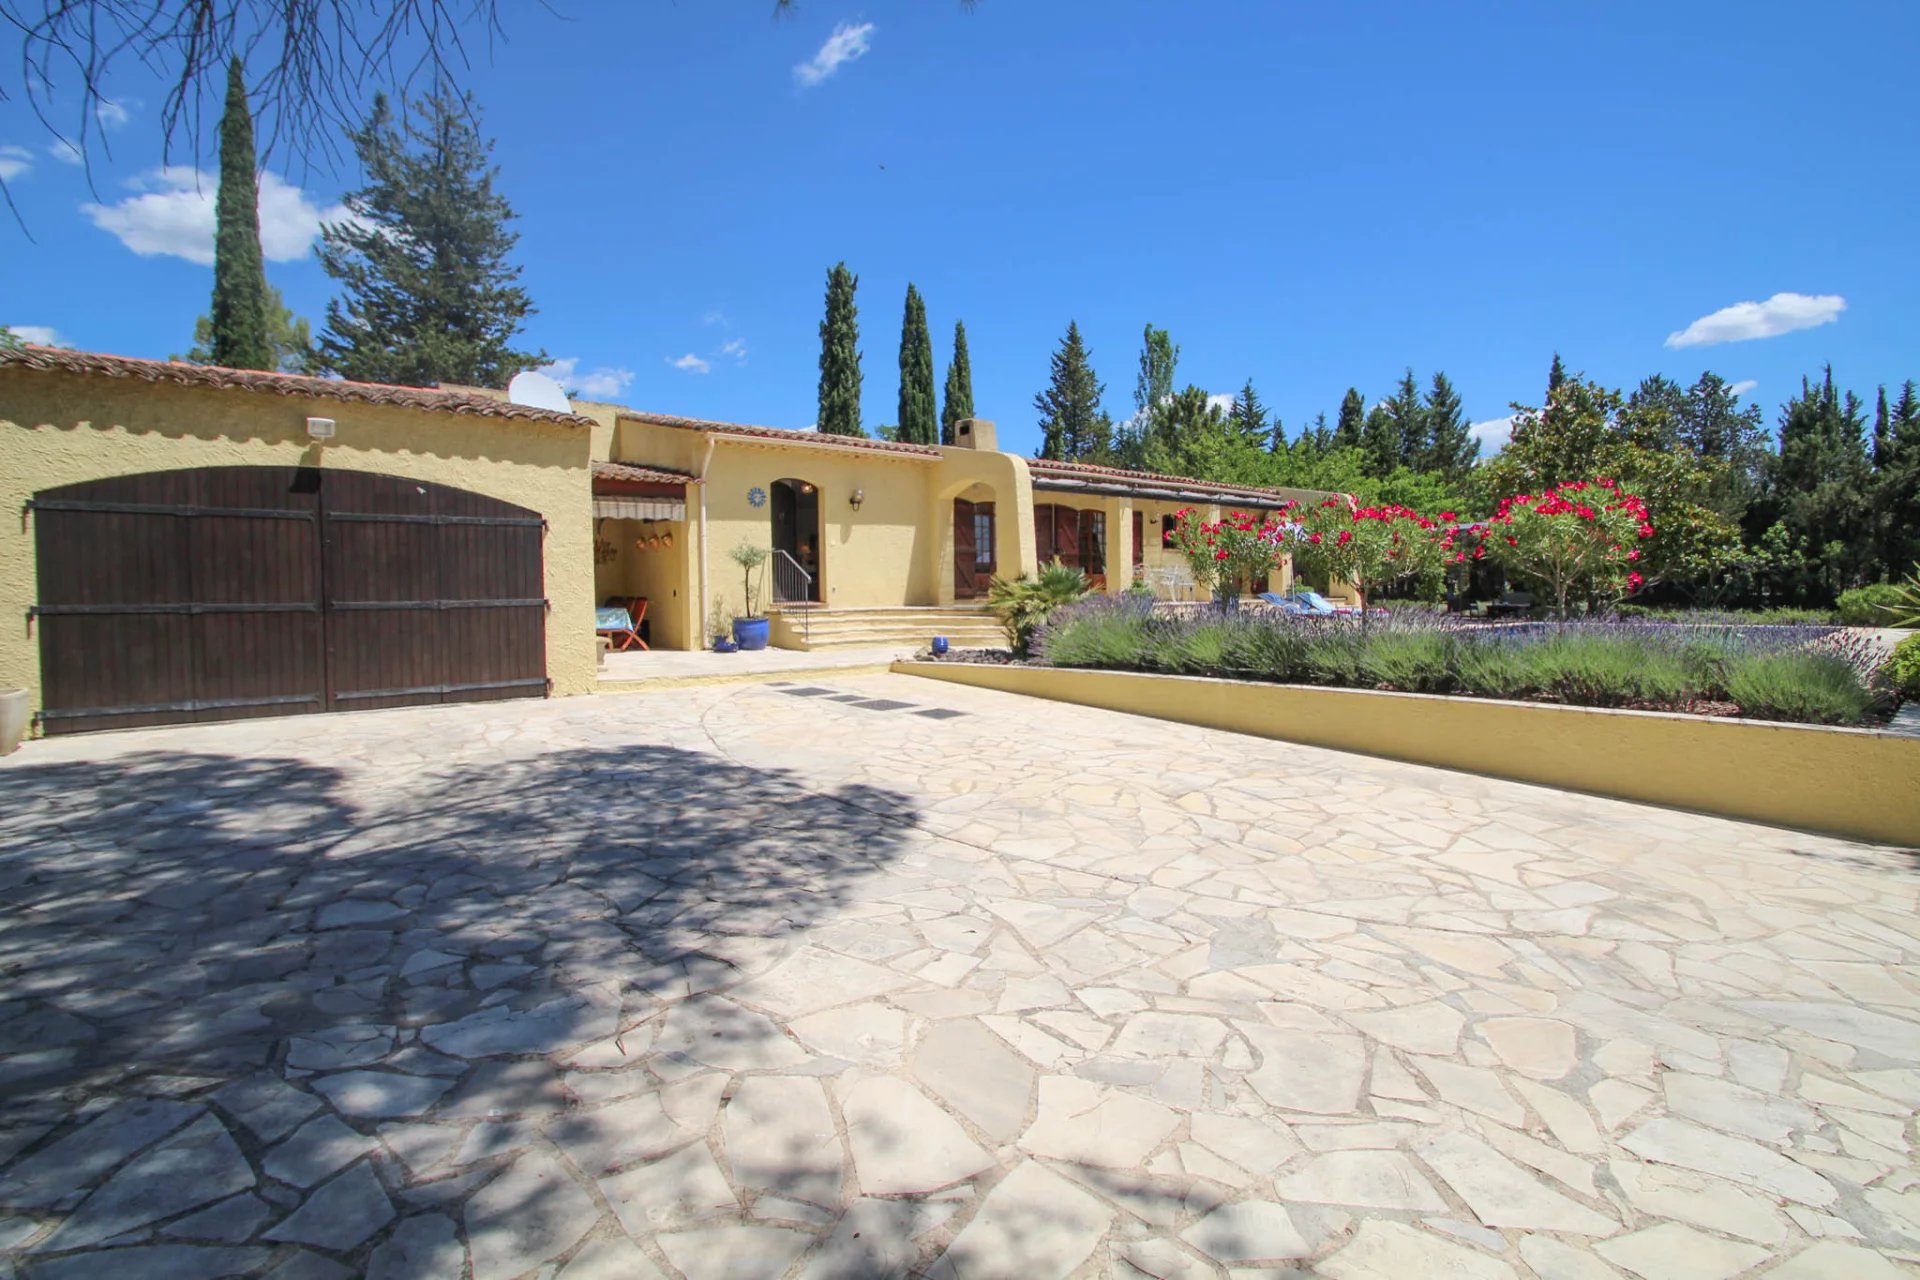 Fayence : Single storey villa with pool and garage